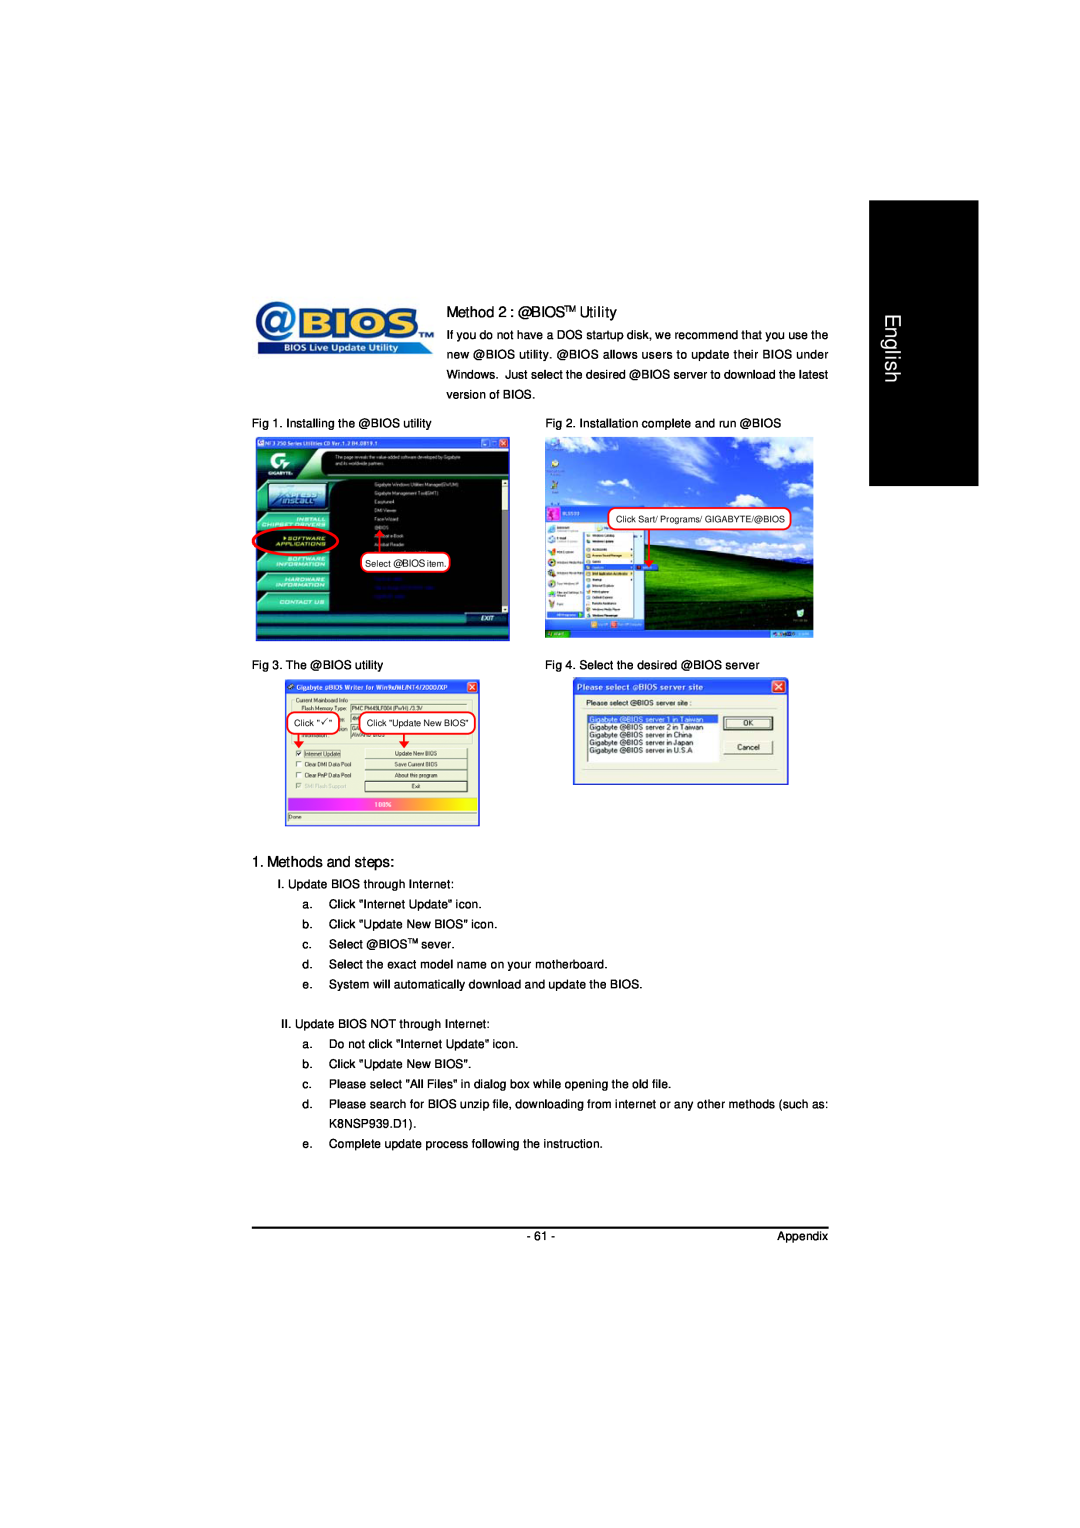 AMD GA-K8NS-939, GA-K8NS PRO-939 user manual Method 2 @BIOSTM Utility, Methods and steps, English 